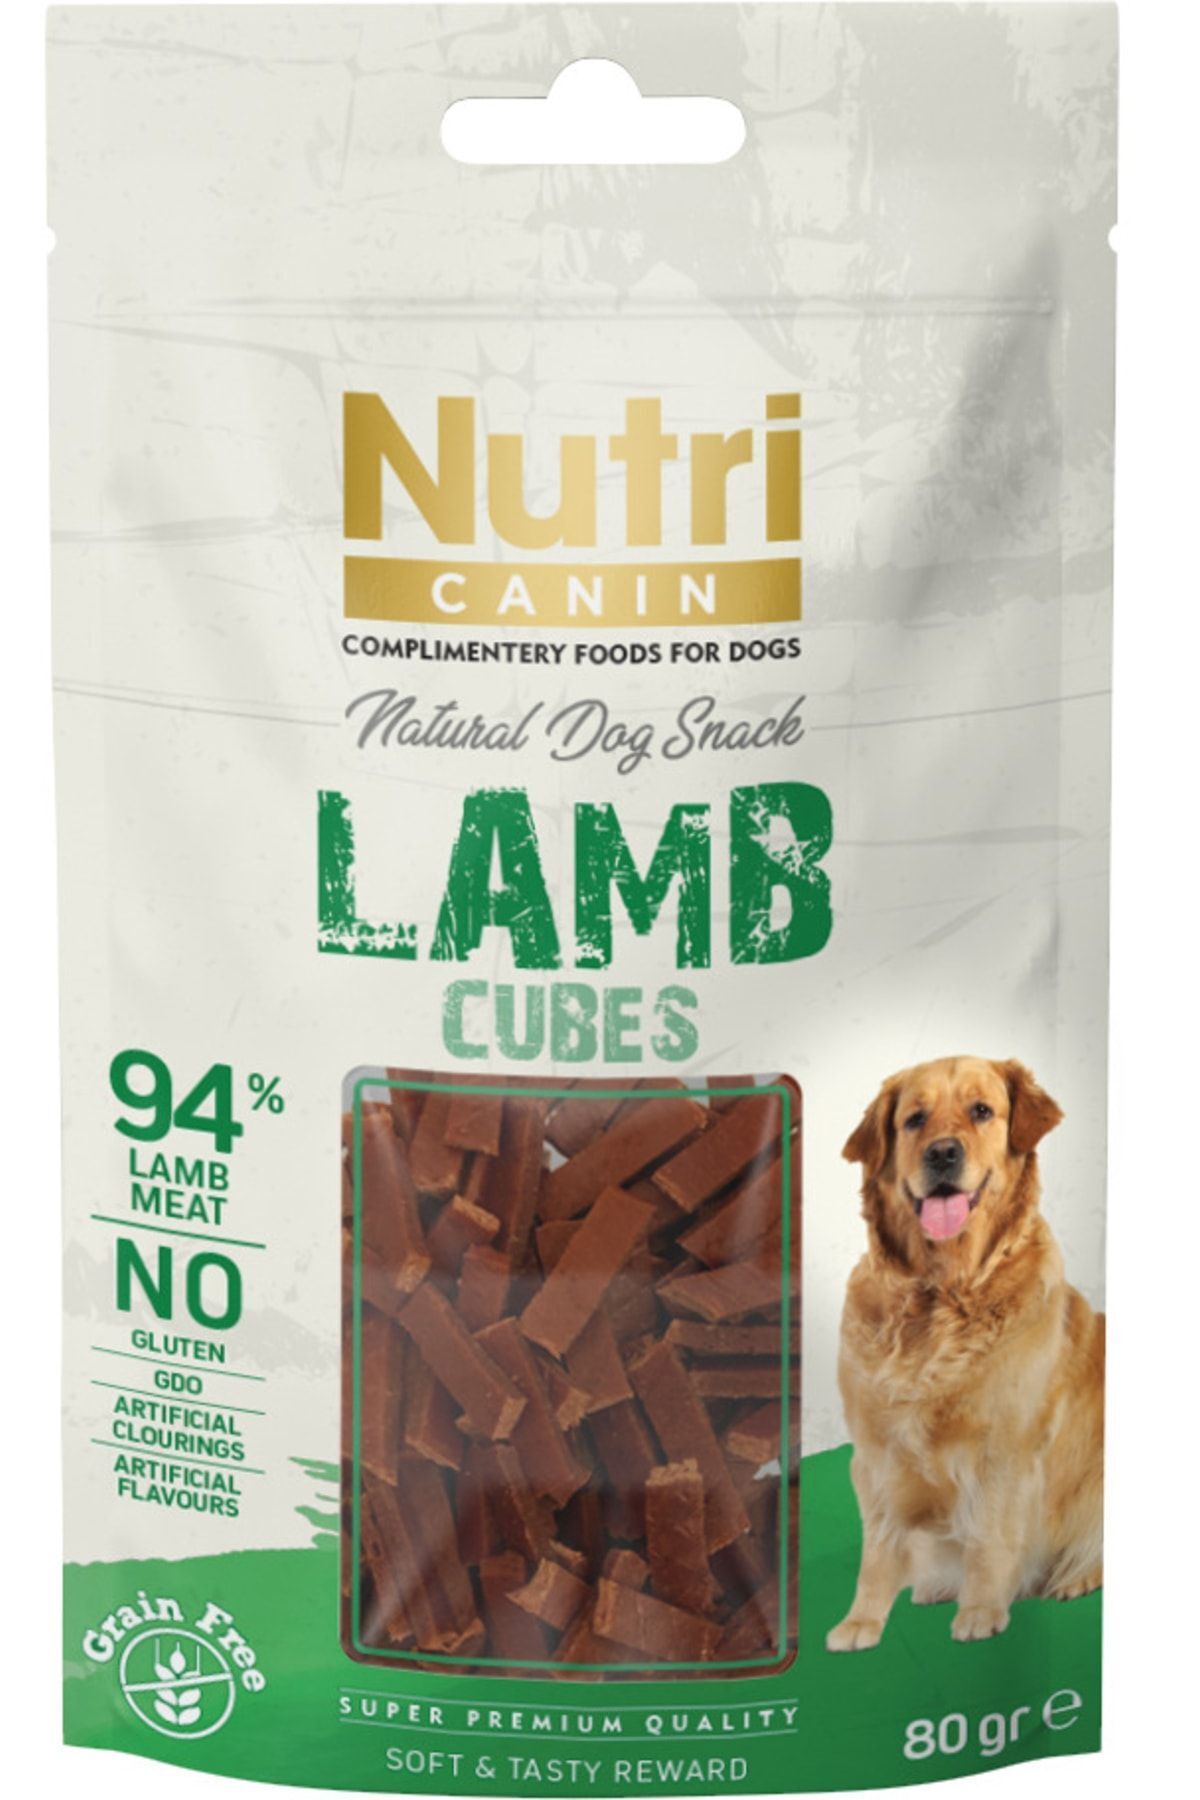 Nutri Canin Lamb(kuzu Etli) Cubes Snack 80gr.